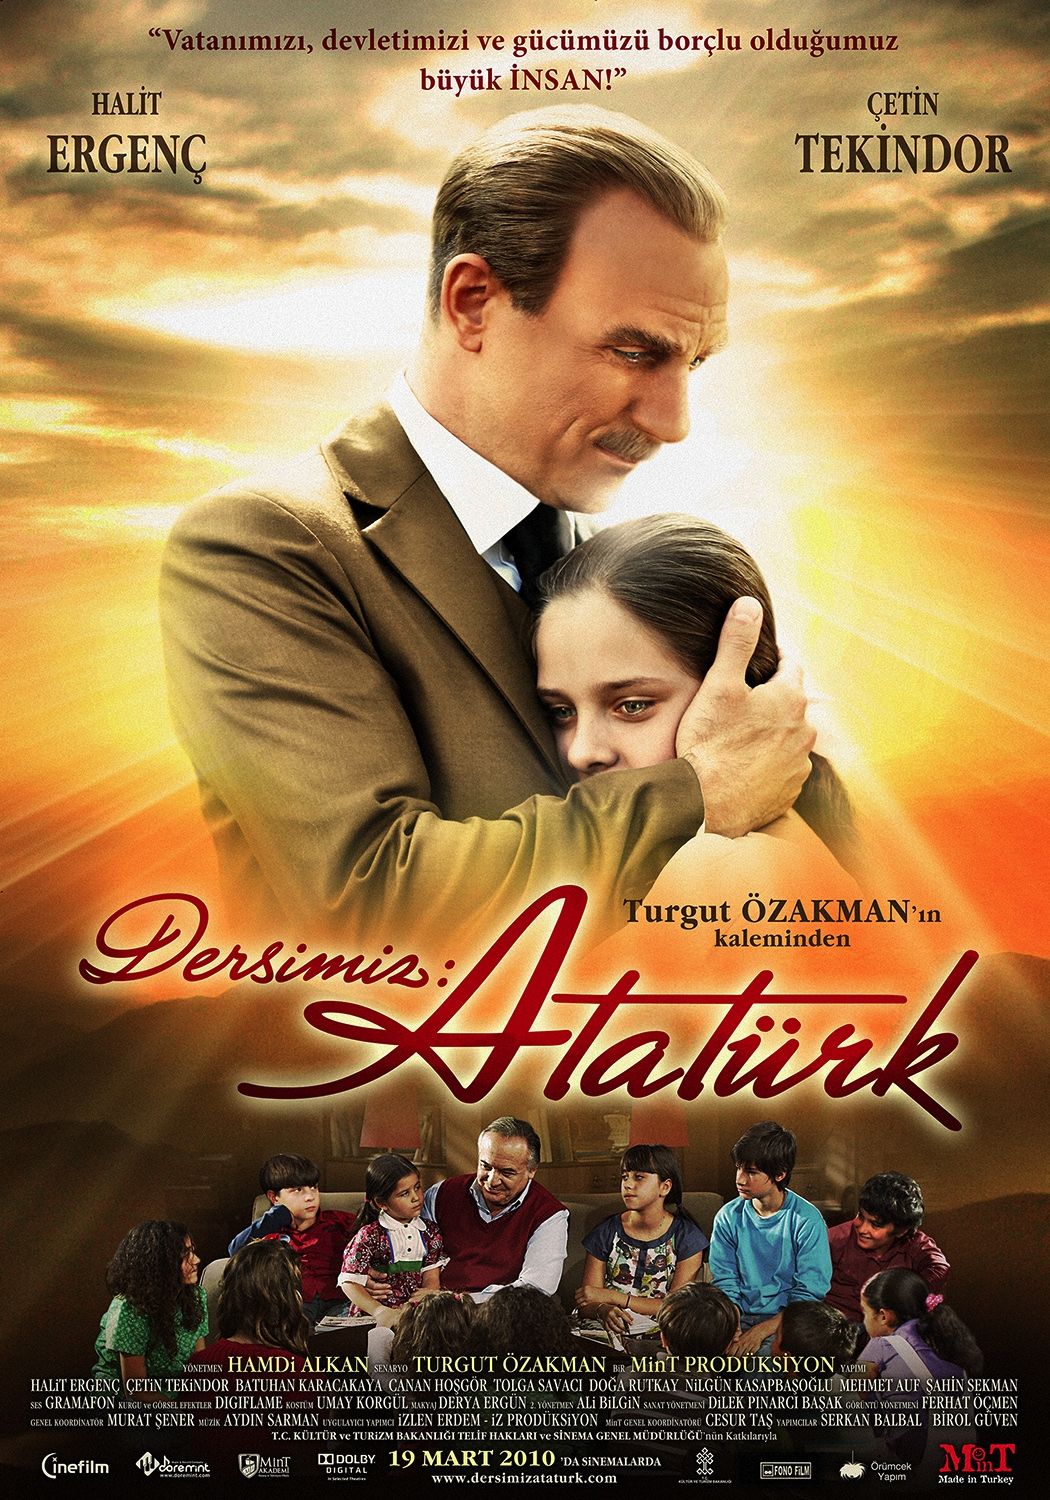 Extra Large Movie Poster Image for Dersimiz: Ataturk (#3 of 3)